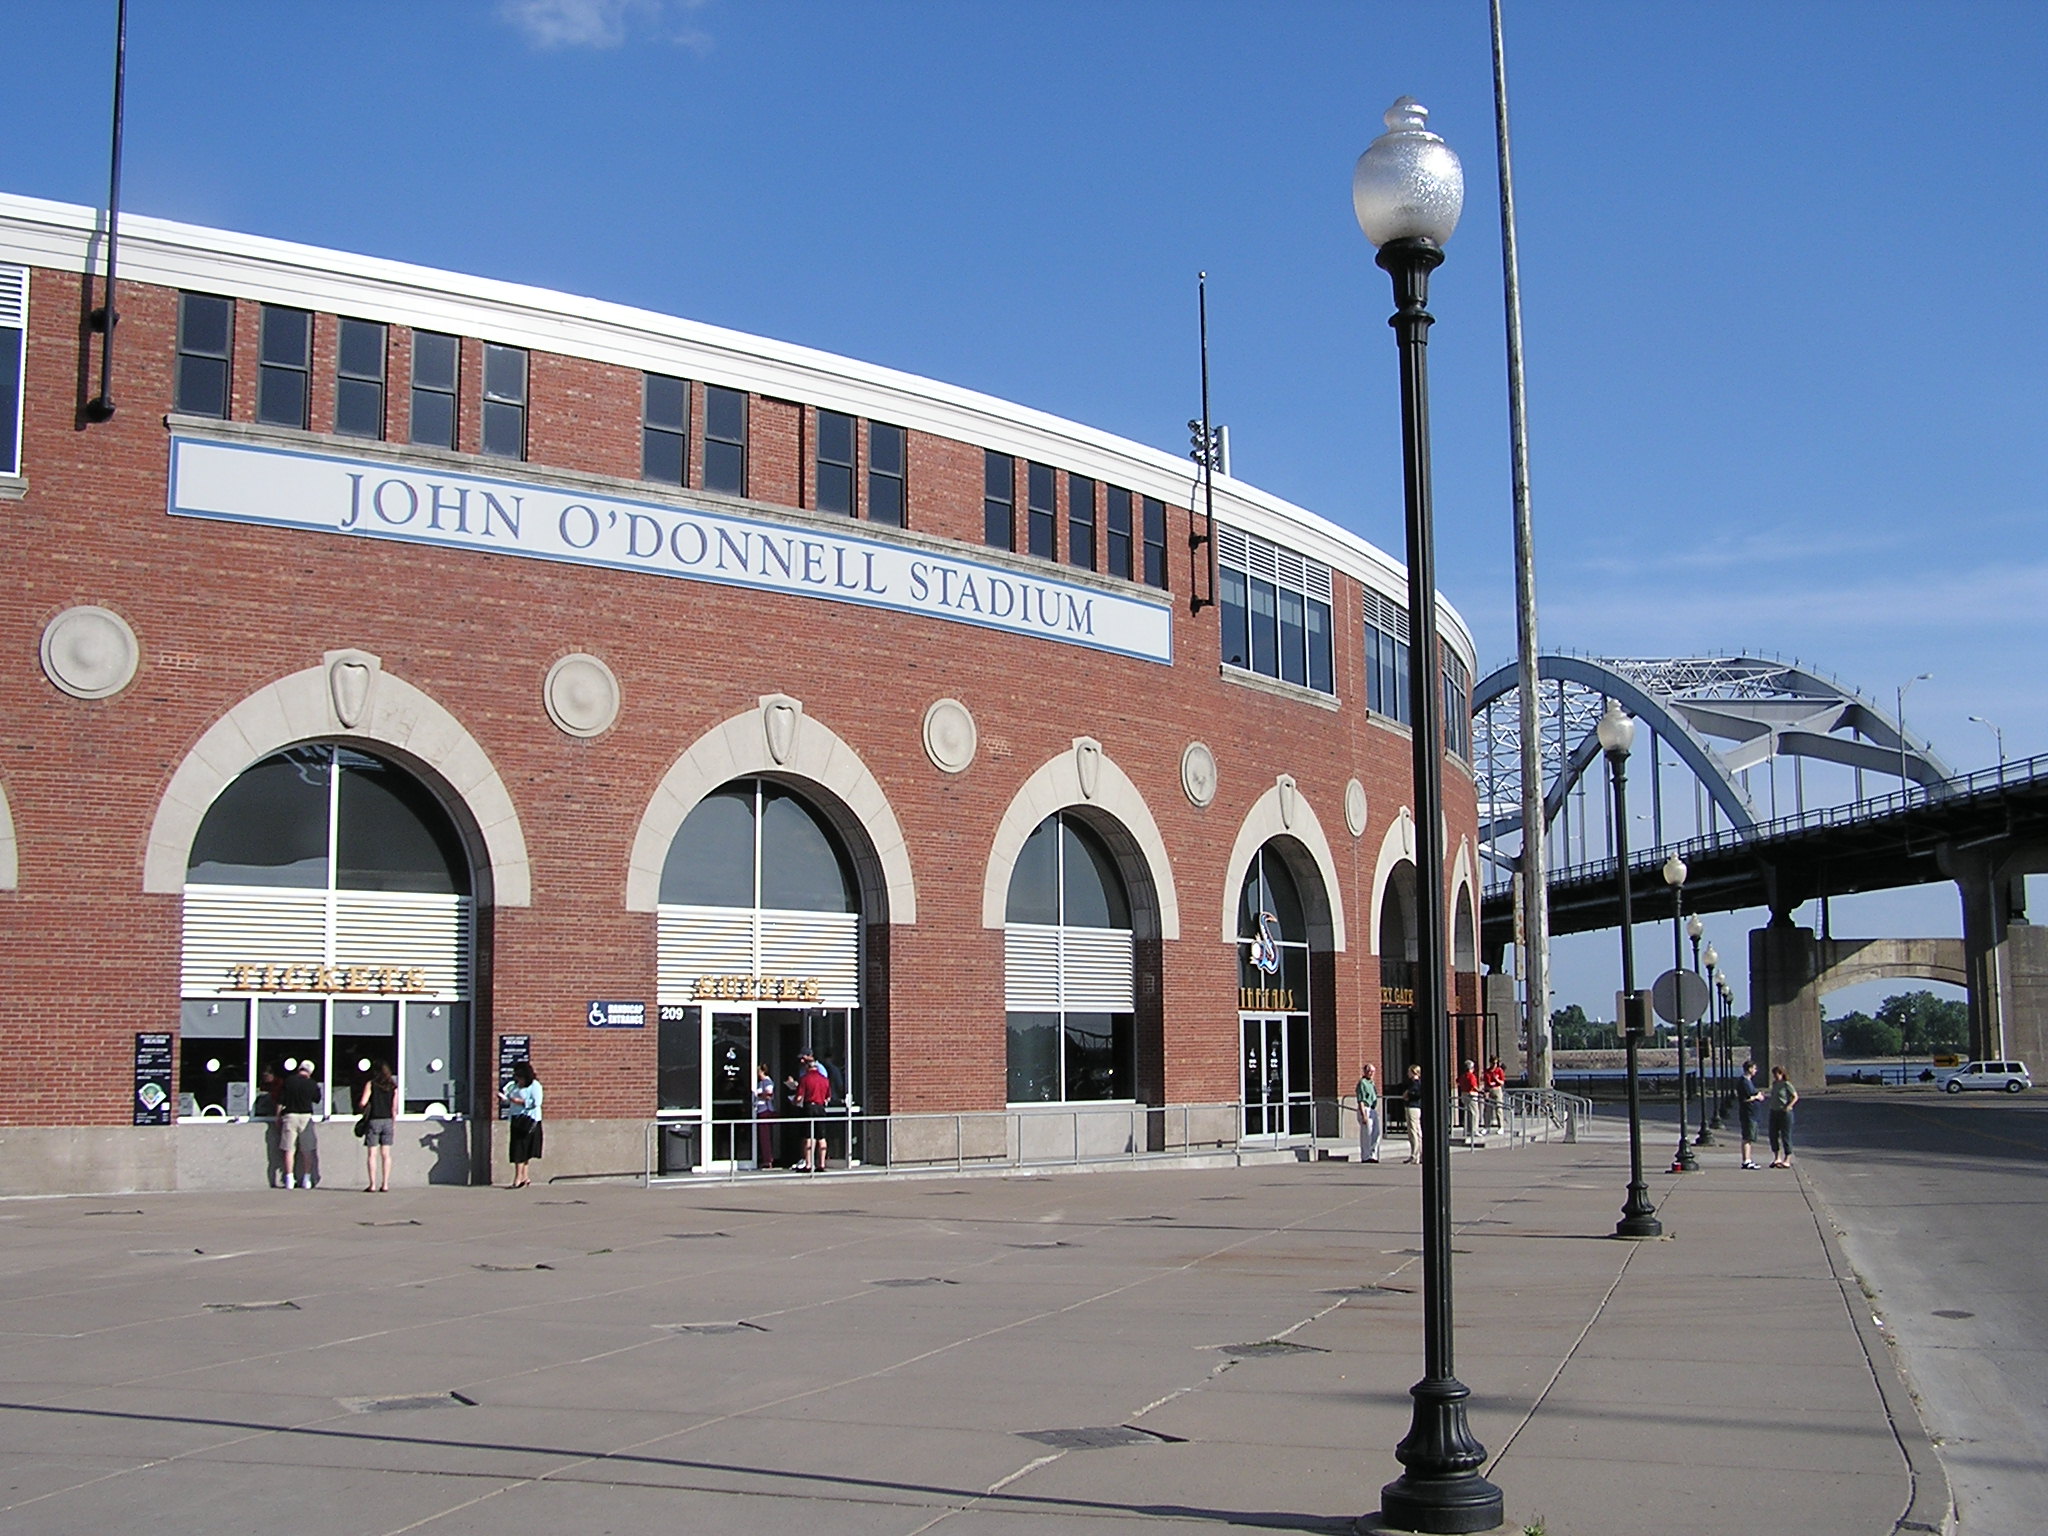 John O'Donnell Stadium, the city's historic riverfront baseball stadium